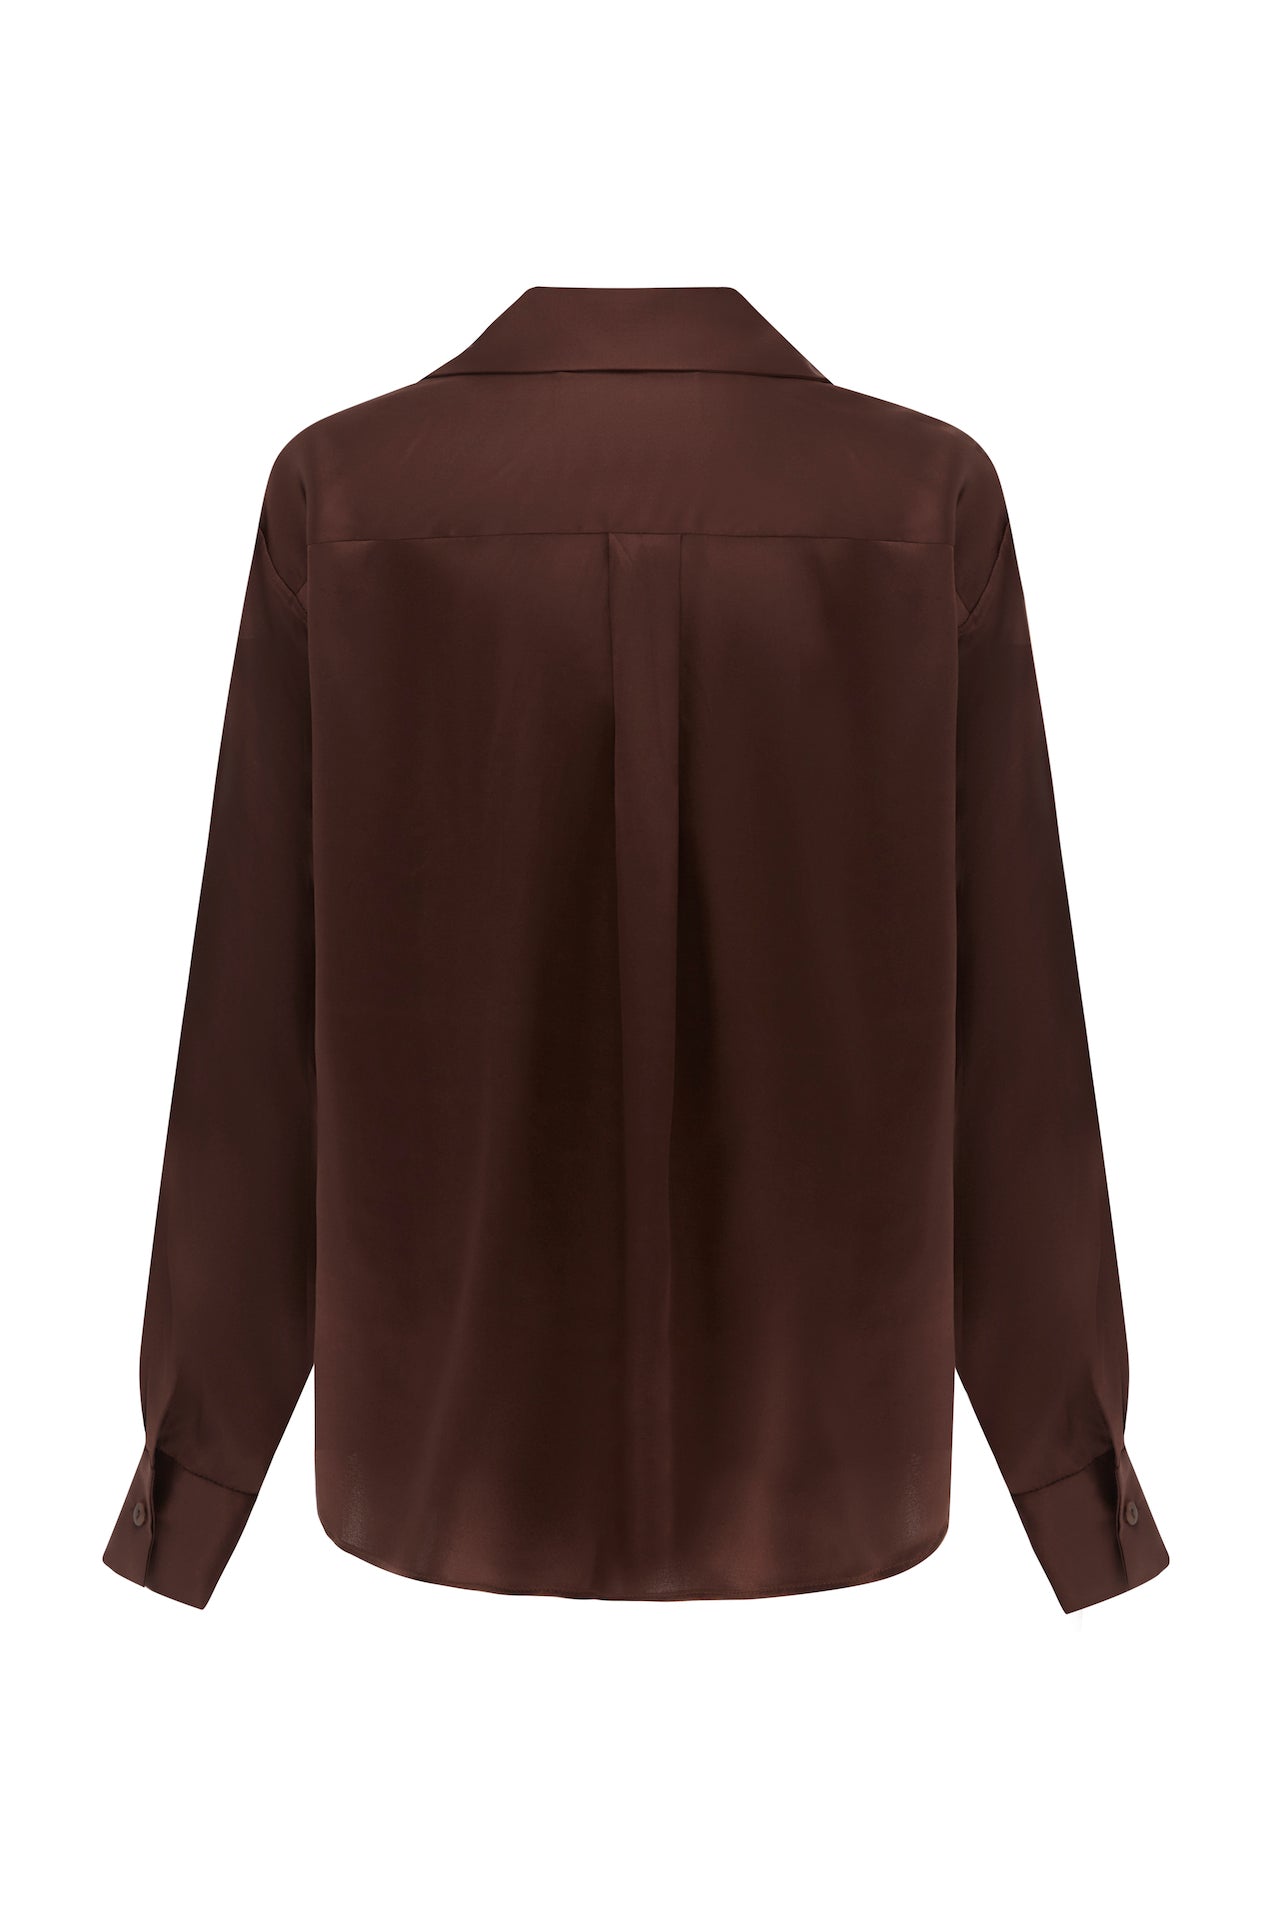 SAINT classic silk shirt in chocolate brown pure silk. made in Australia. 100% silk satin